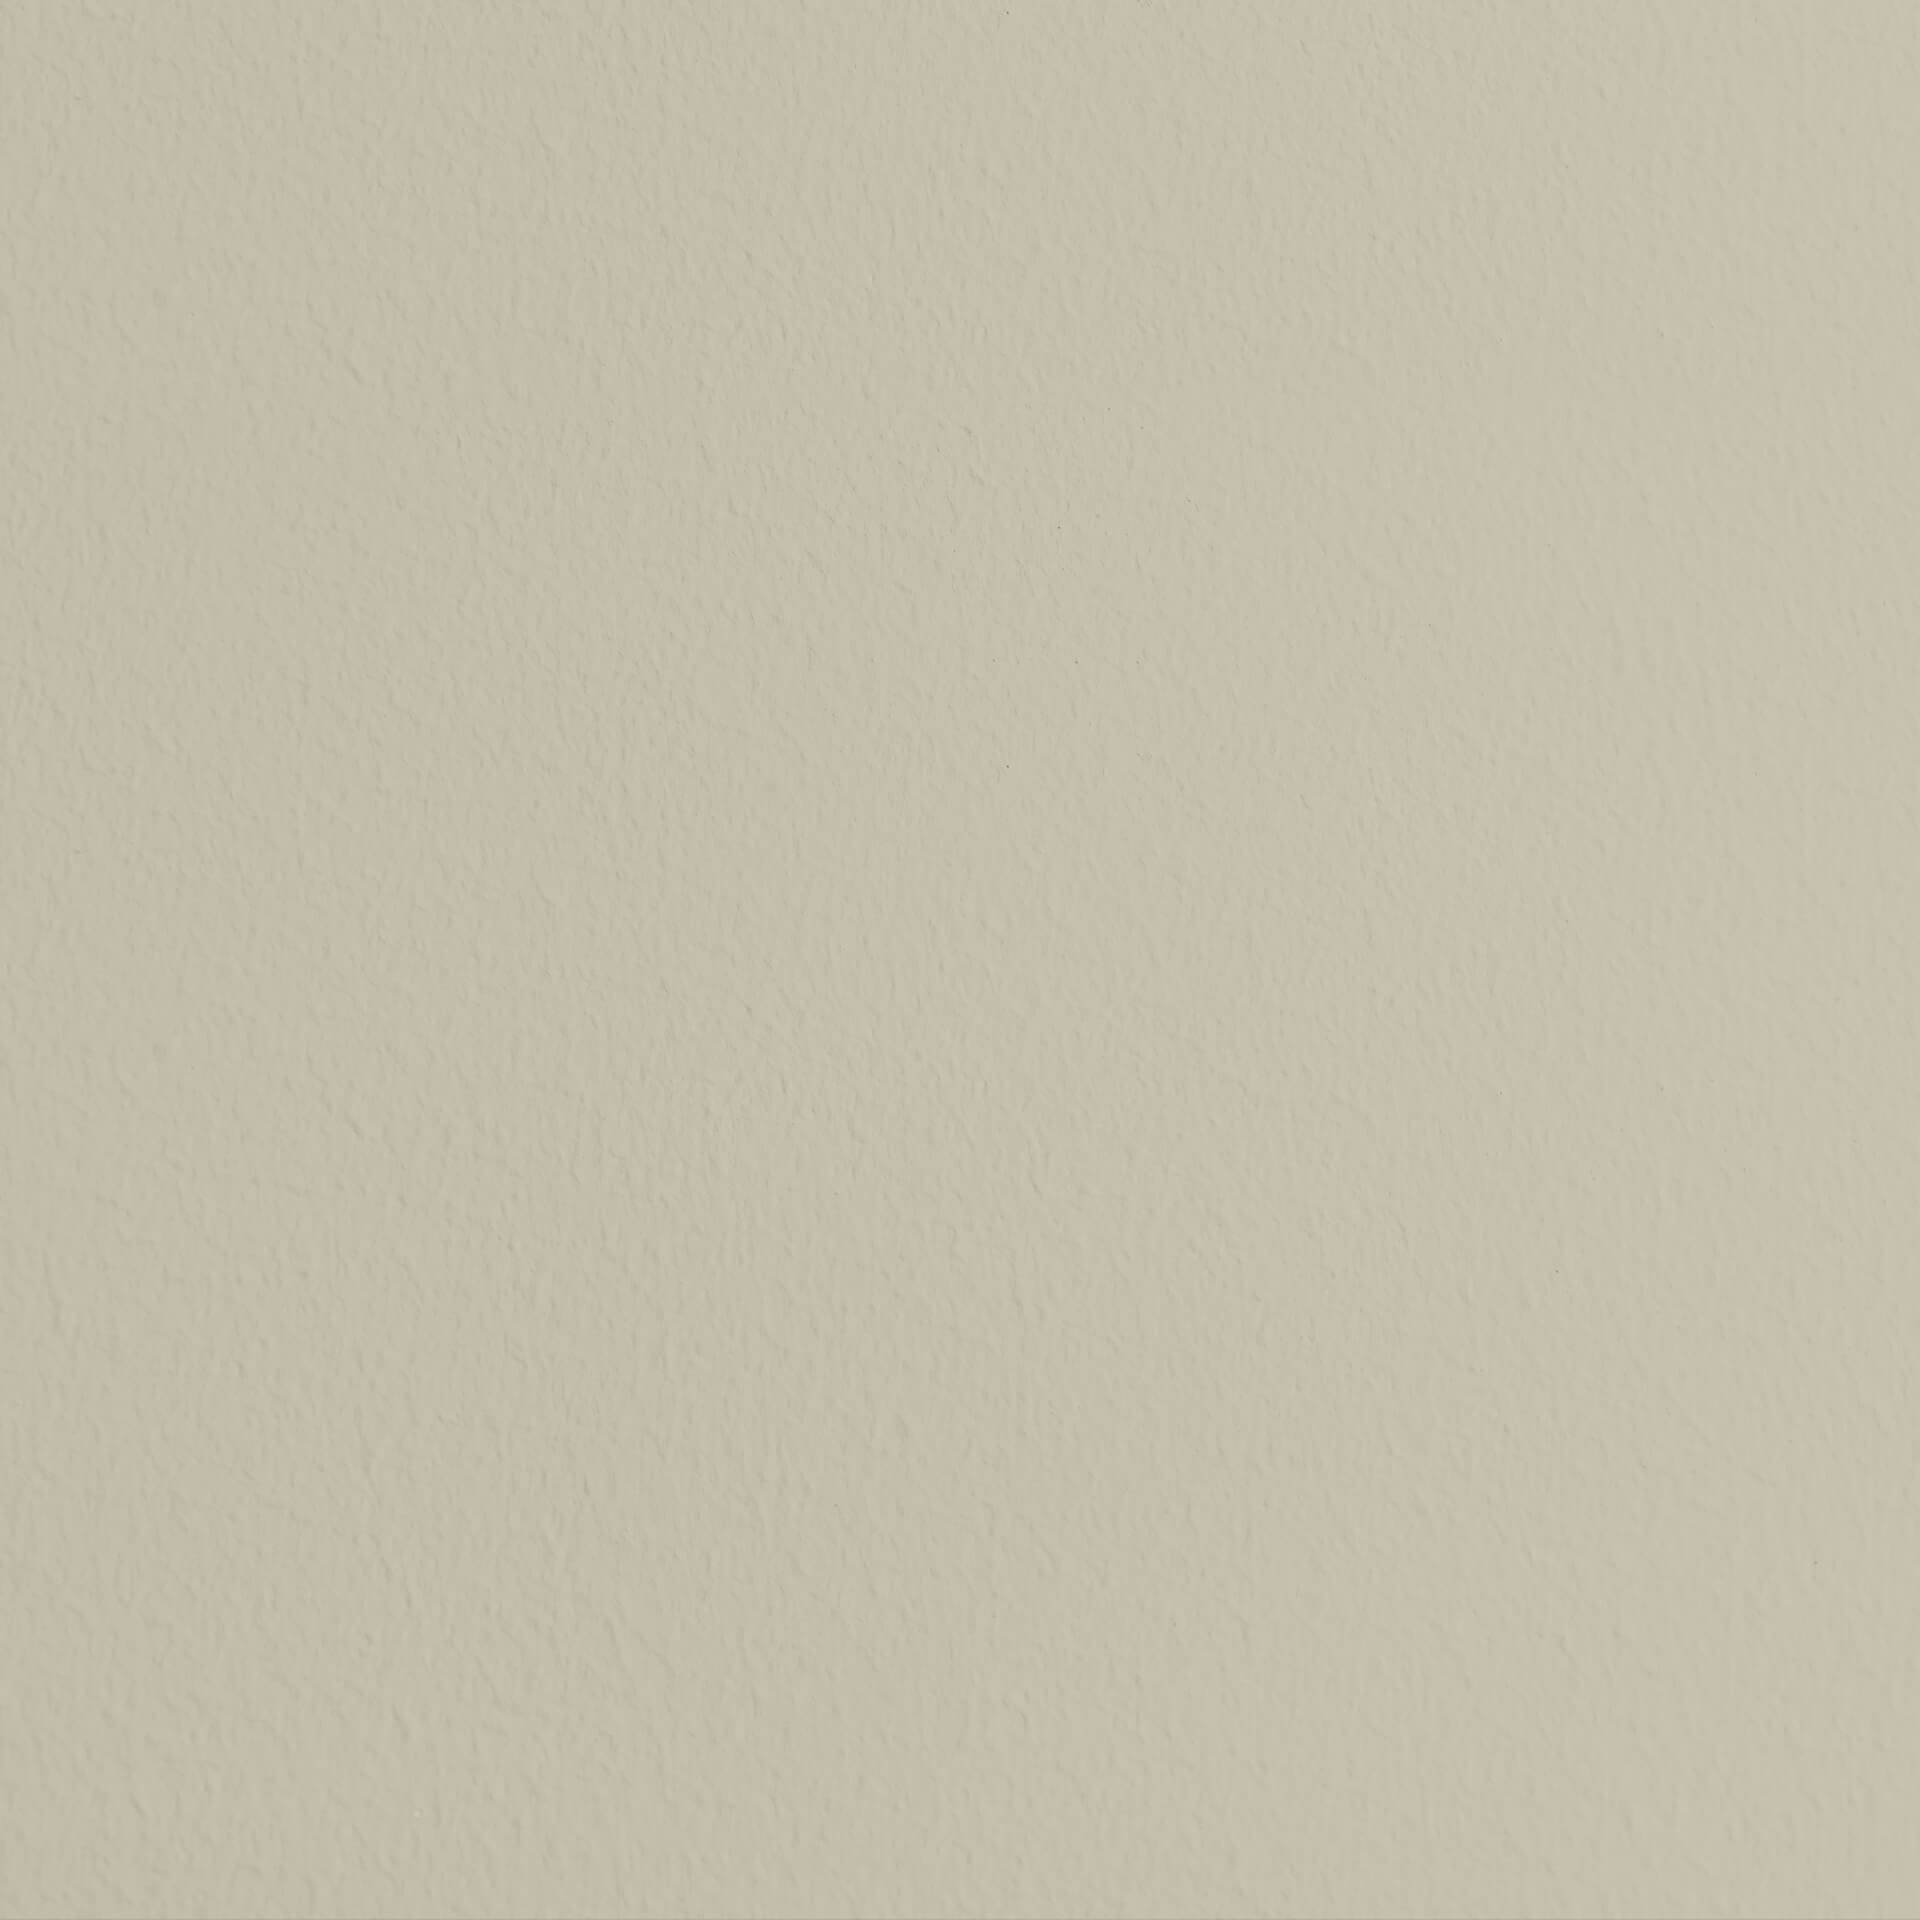 Mylands Flanders Grey No. 110 - Marble Matt Emulsion / Wandfarbe, 5L